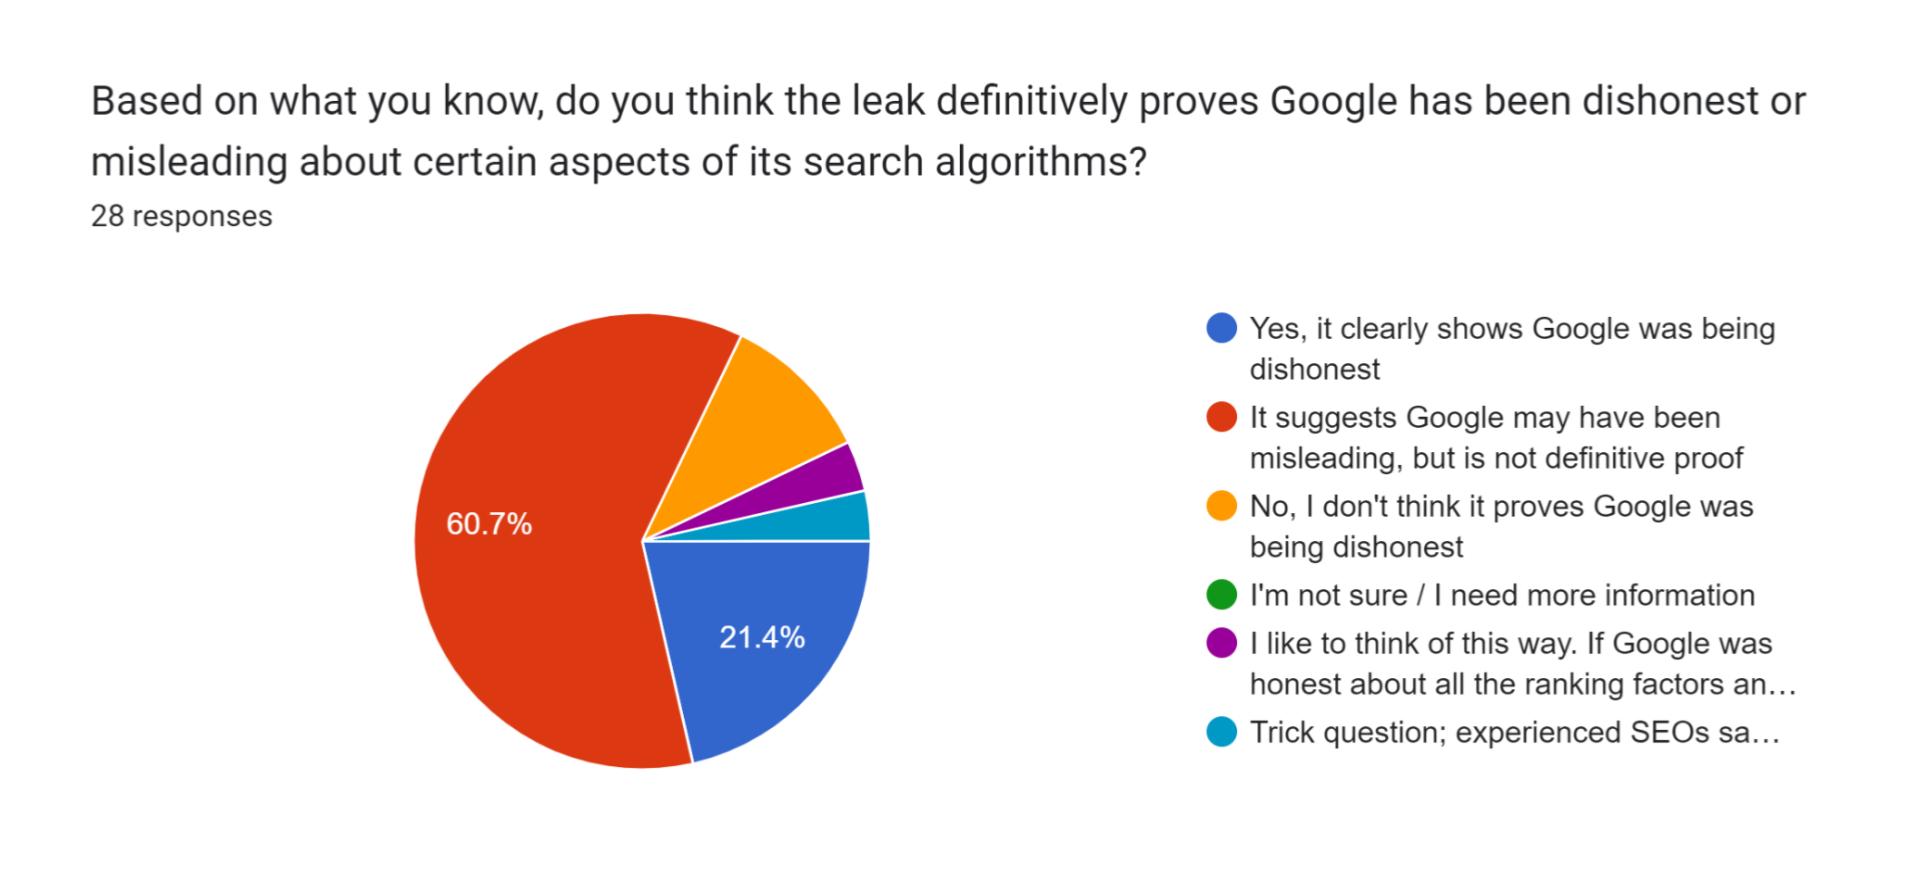 Is Google dishonest or misleading